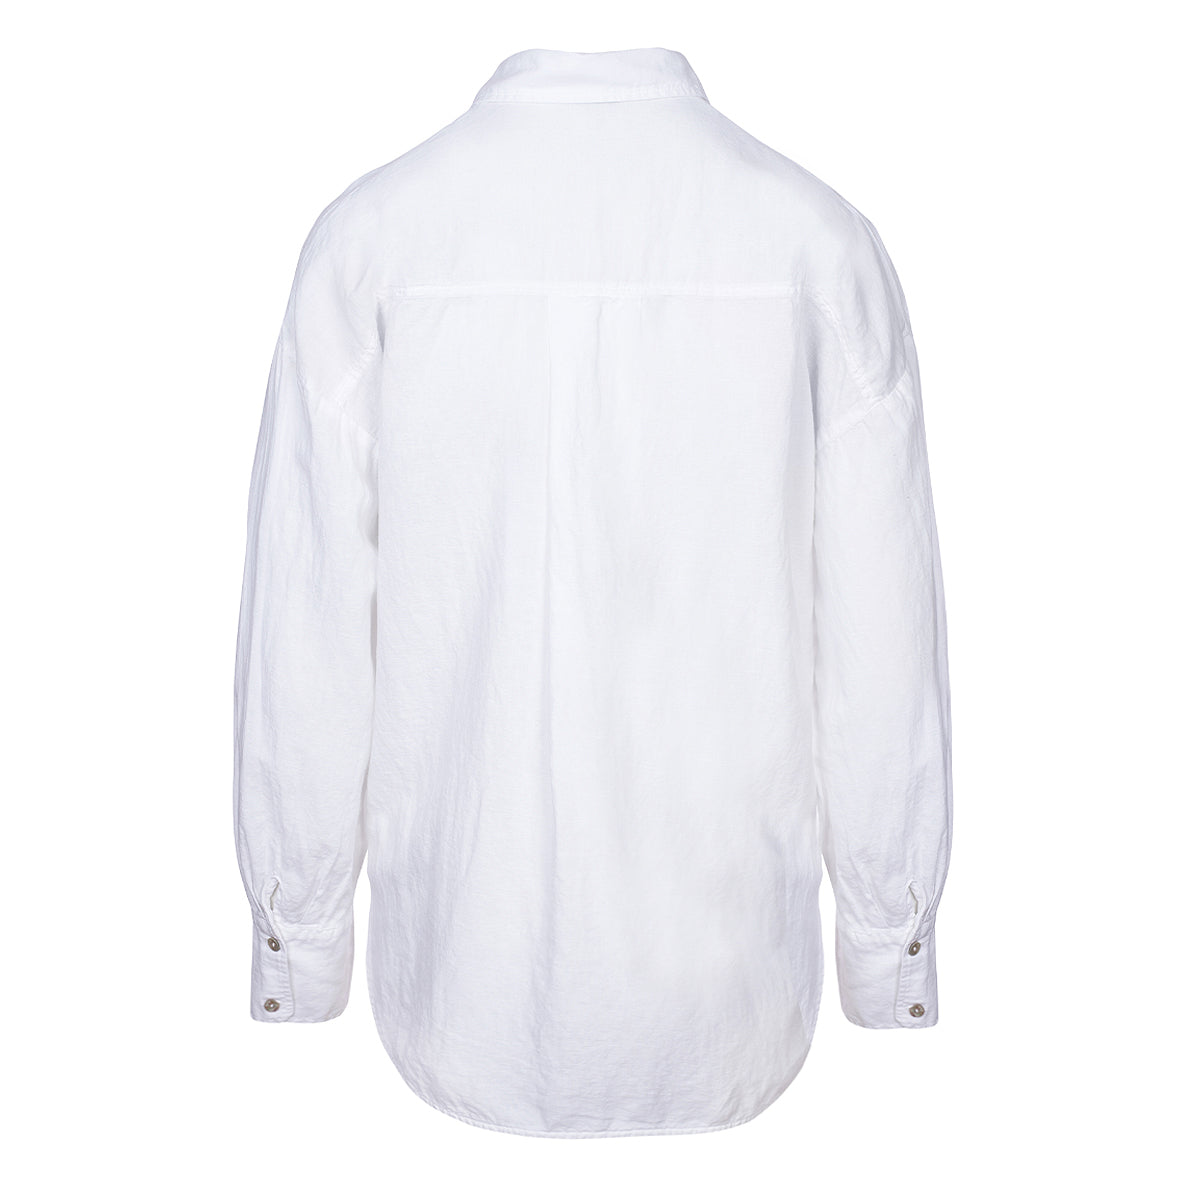 LUXZUZ // ONE TWO Gertantu Shirt Shirt 901 White